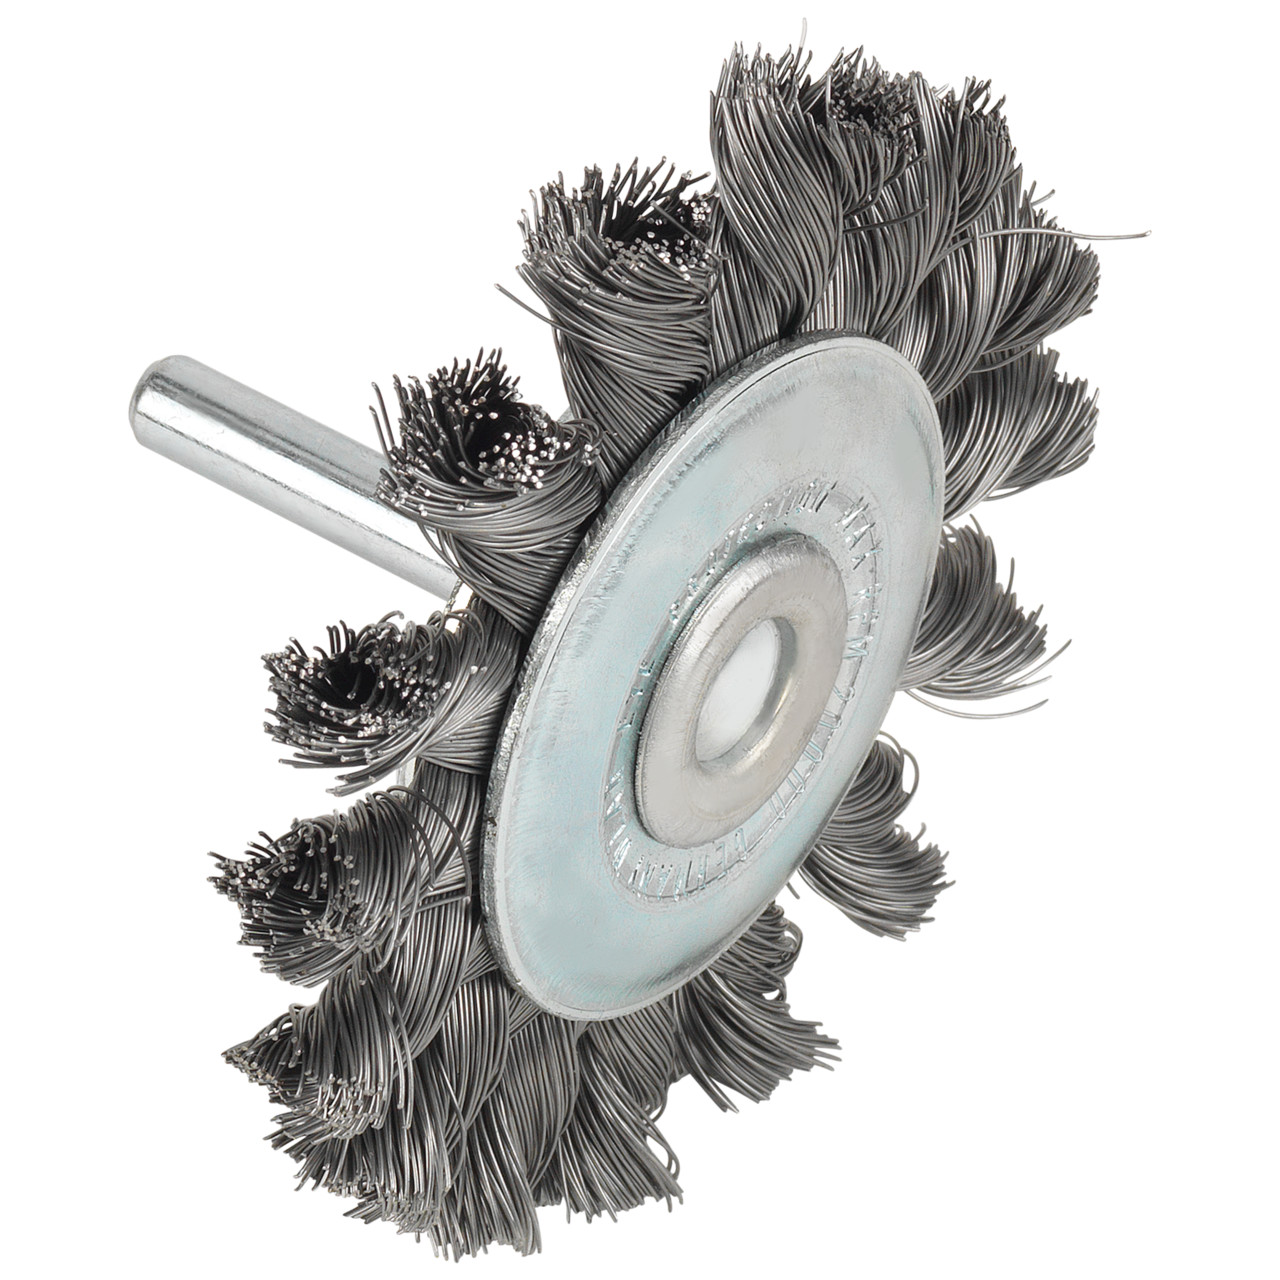 Tyrolit Round shank brushes DxLxH-GExI 70x6x15-6x30 For steel, shape: 52RDZ - (round shank brushes), Art. 34276016